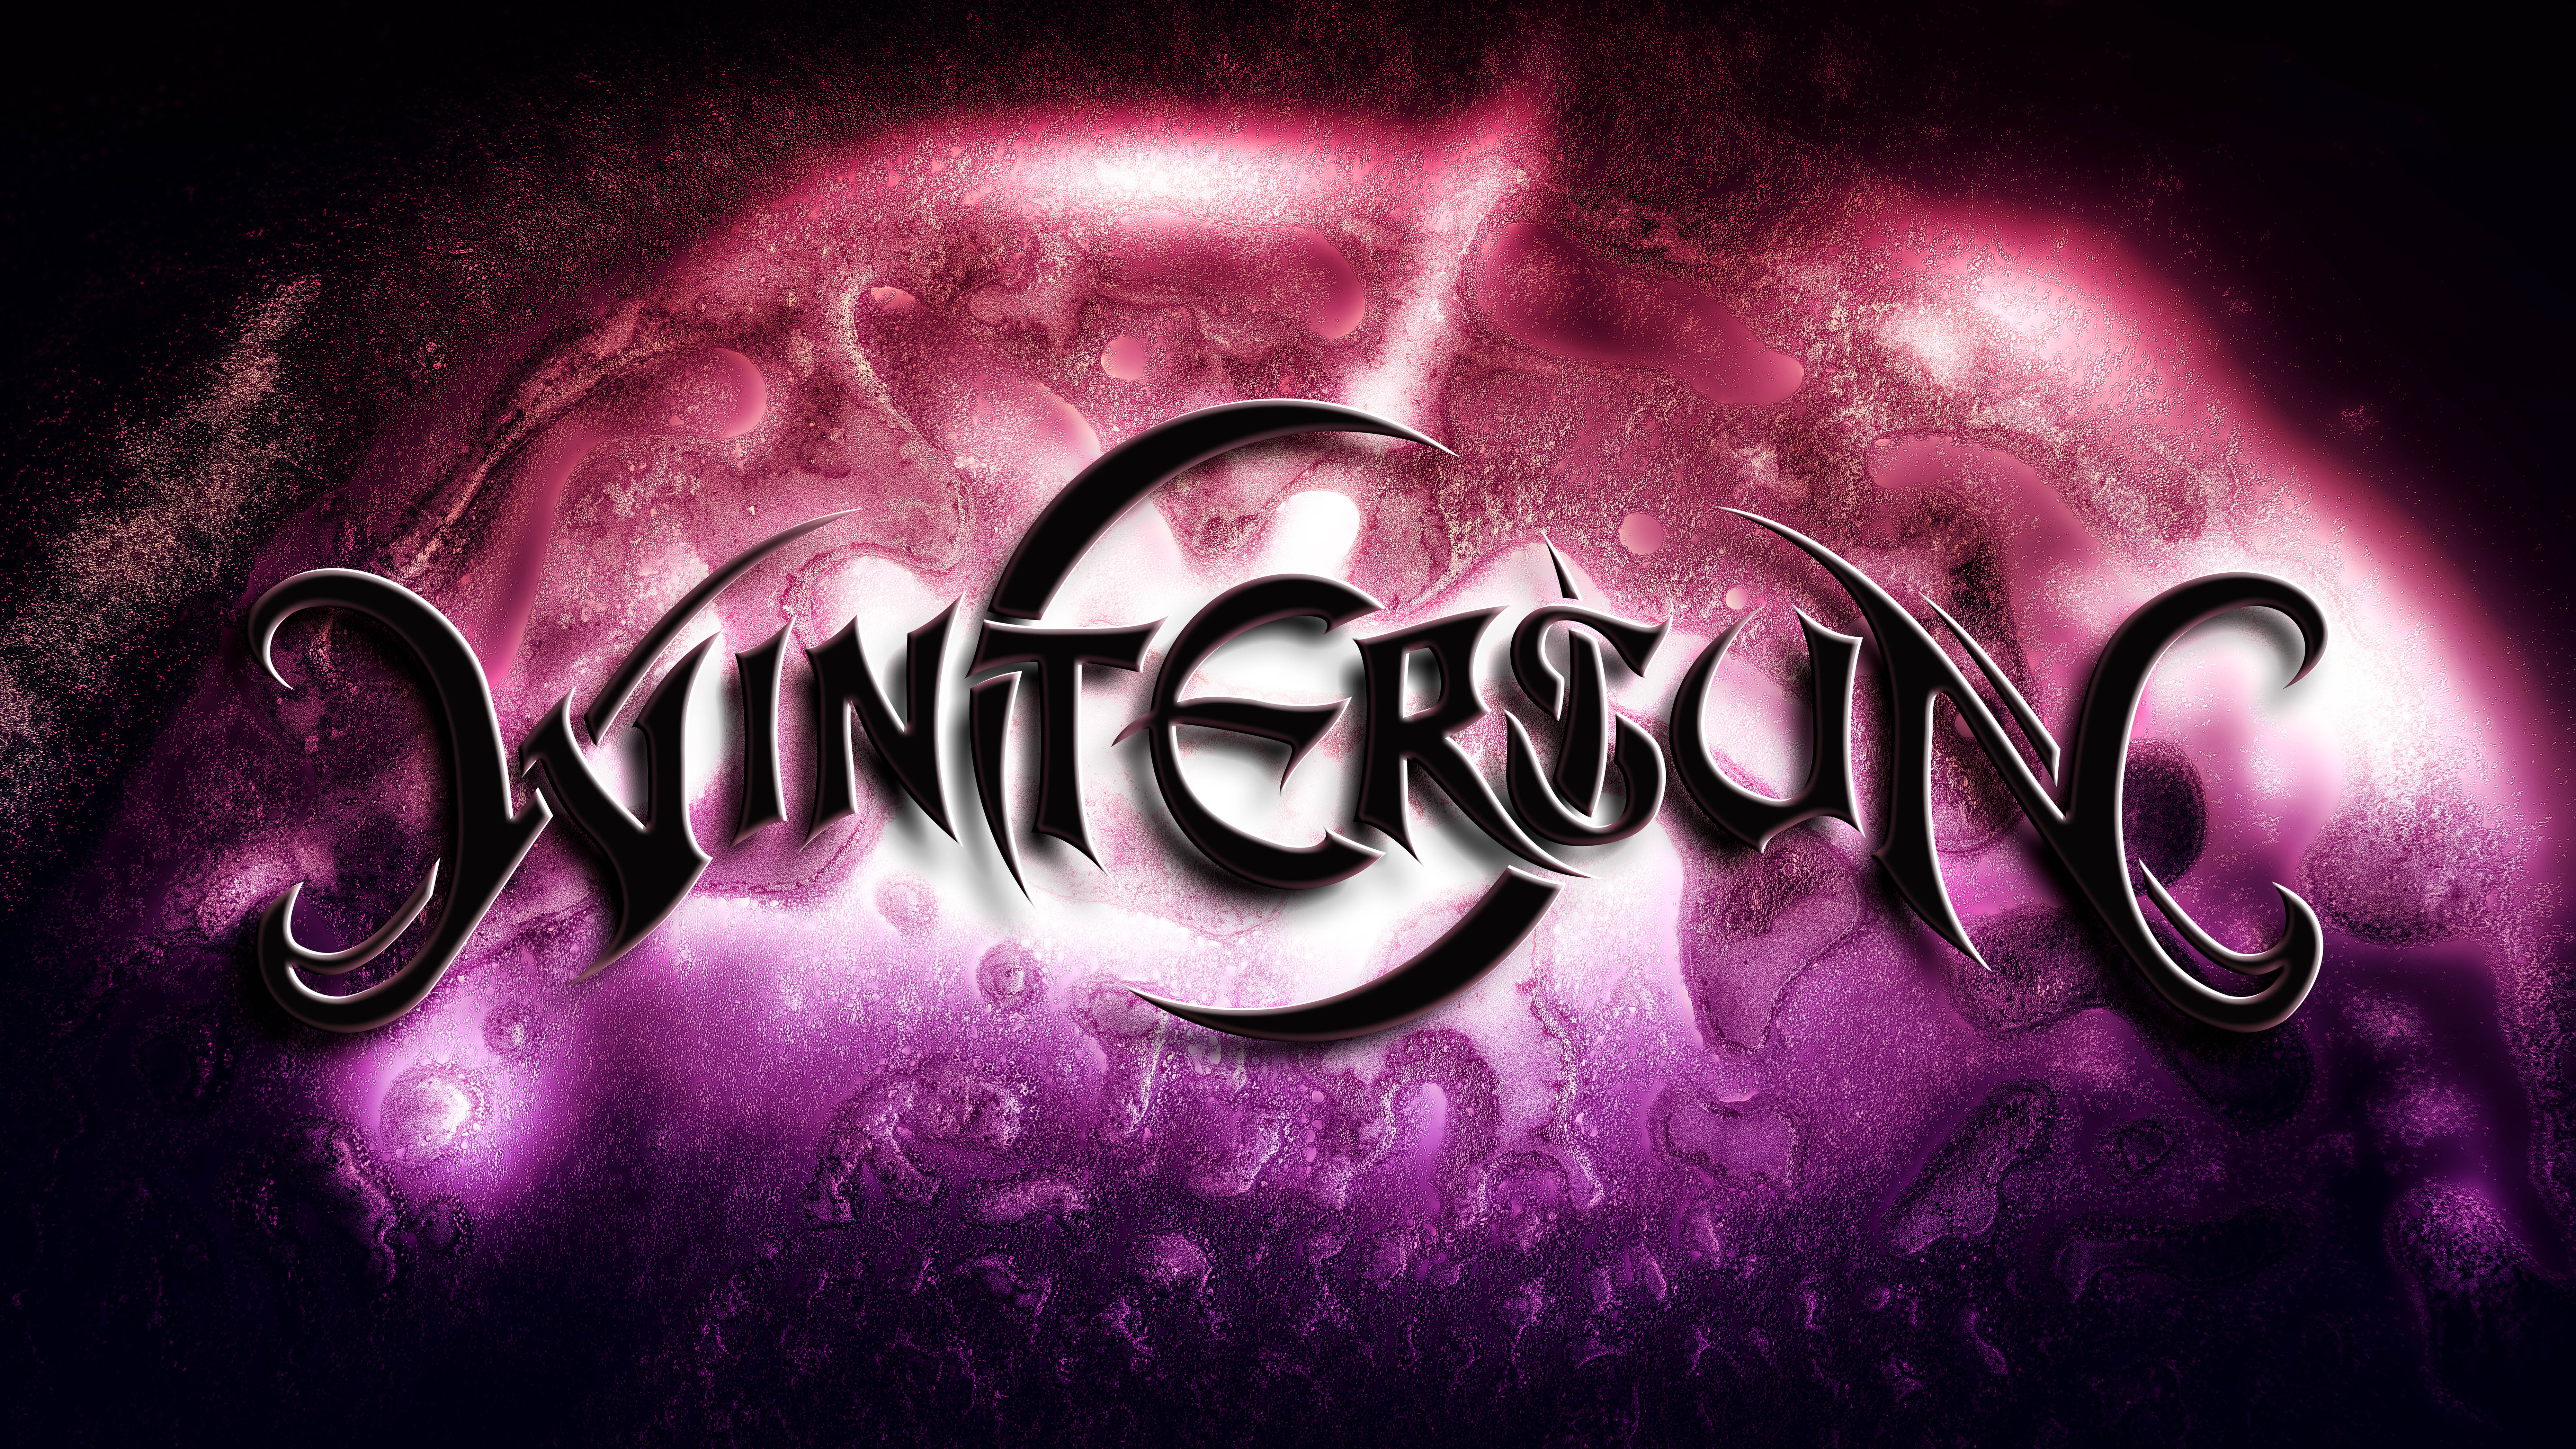 General 7440x4185 Wintersun music metal band band logo typography logo melodic death metal symphonic metal finnish